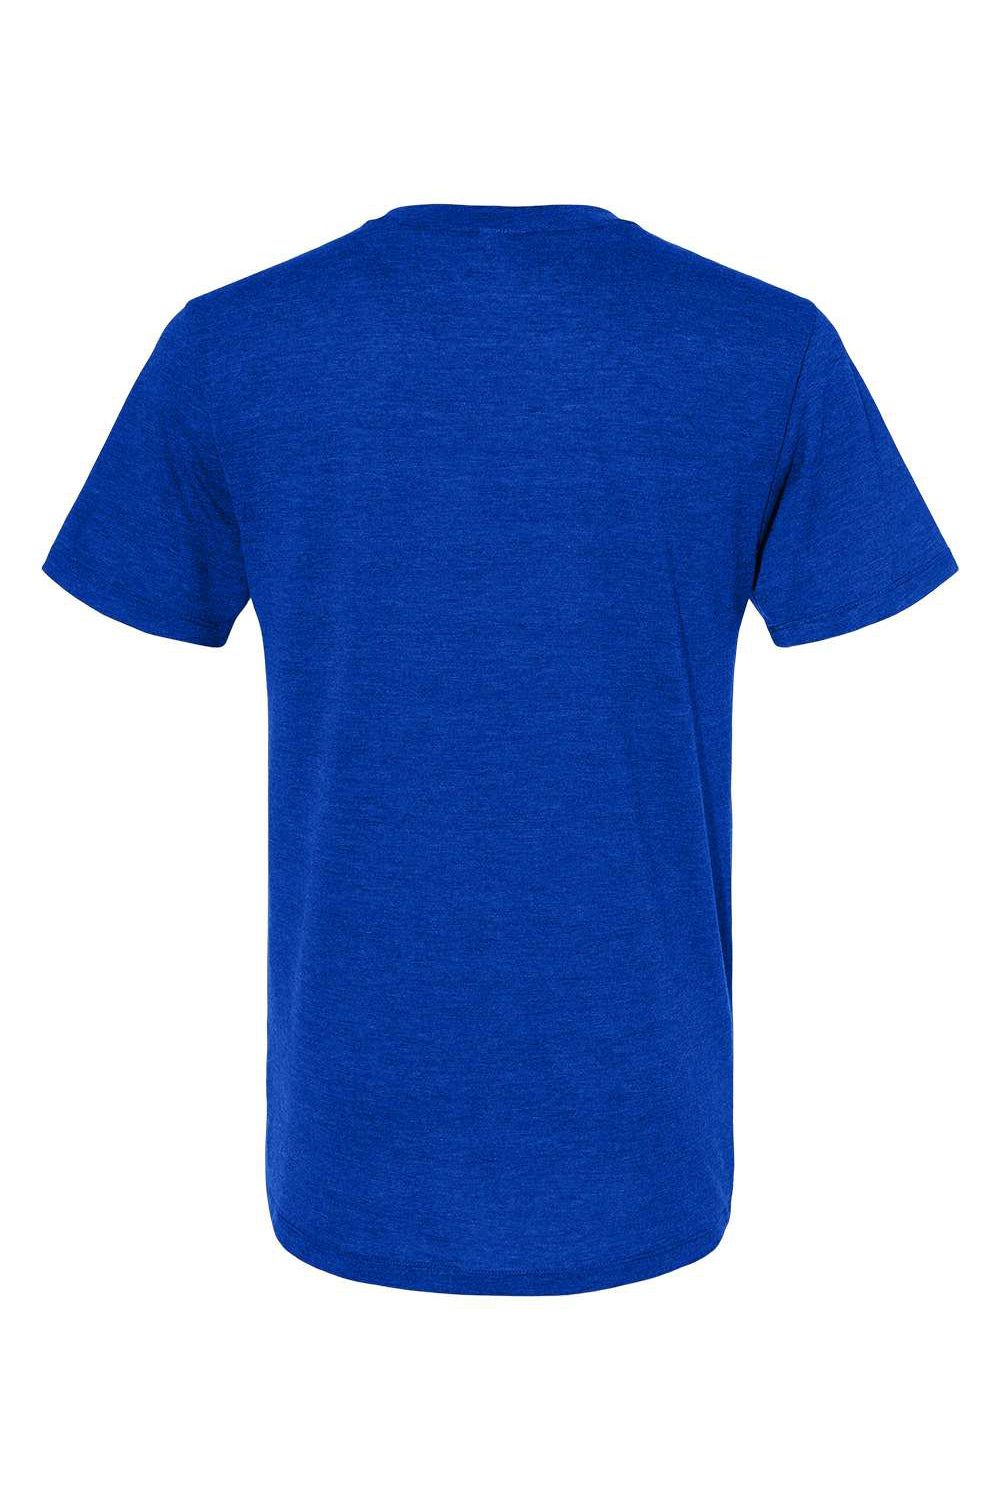 Augusta Sportswear 3065 Mens Short Sleeve Crewneck T-Shirt Heather Royal Blue Flat Back